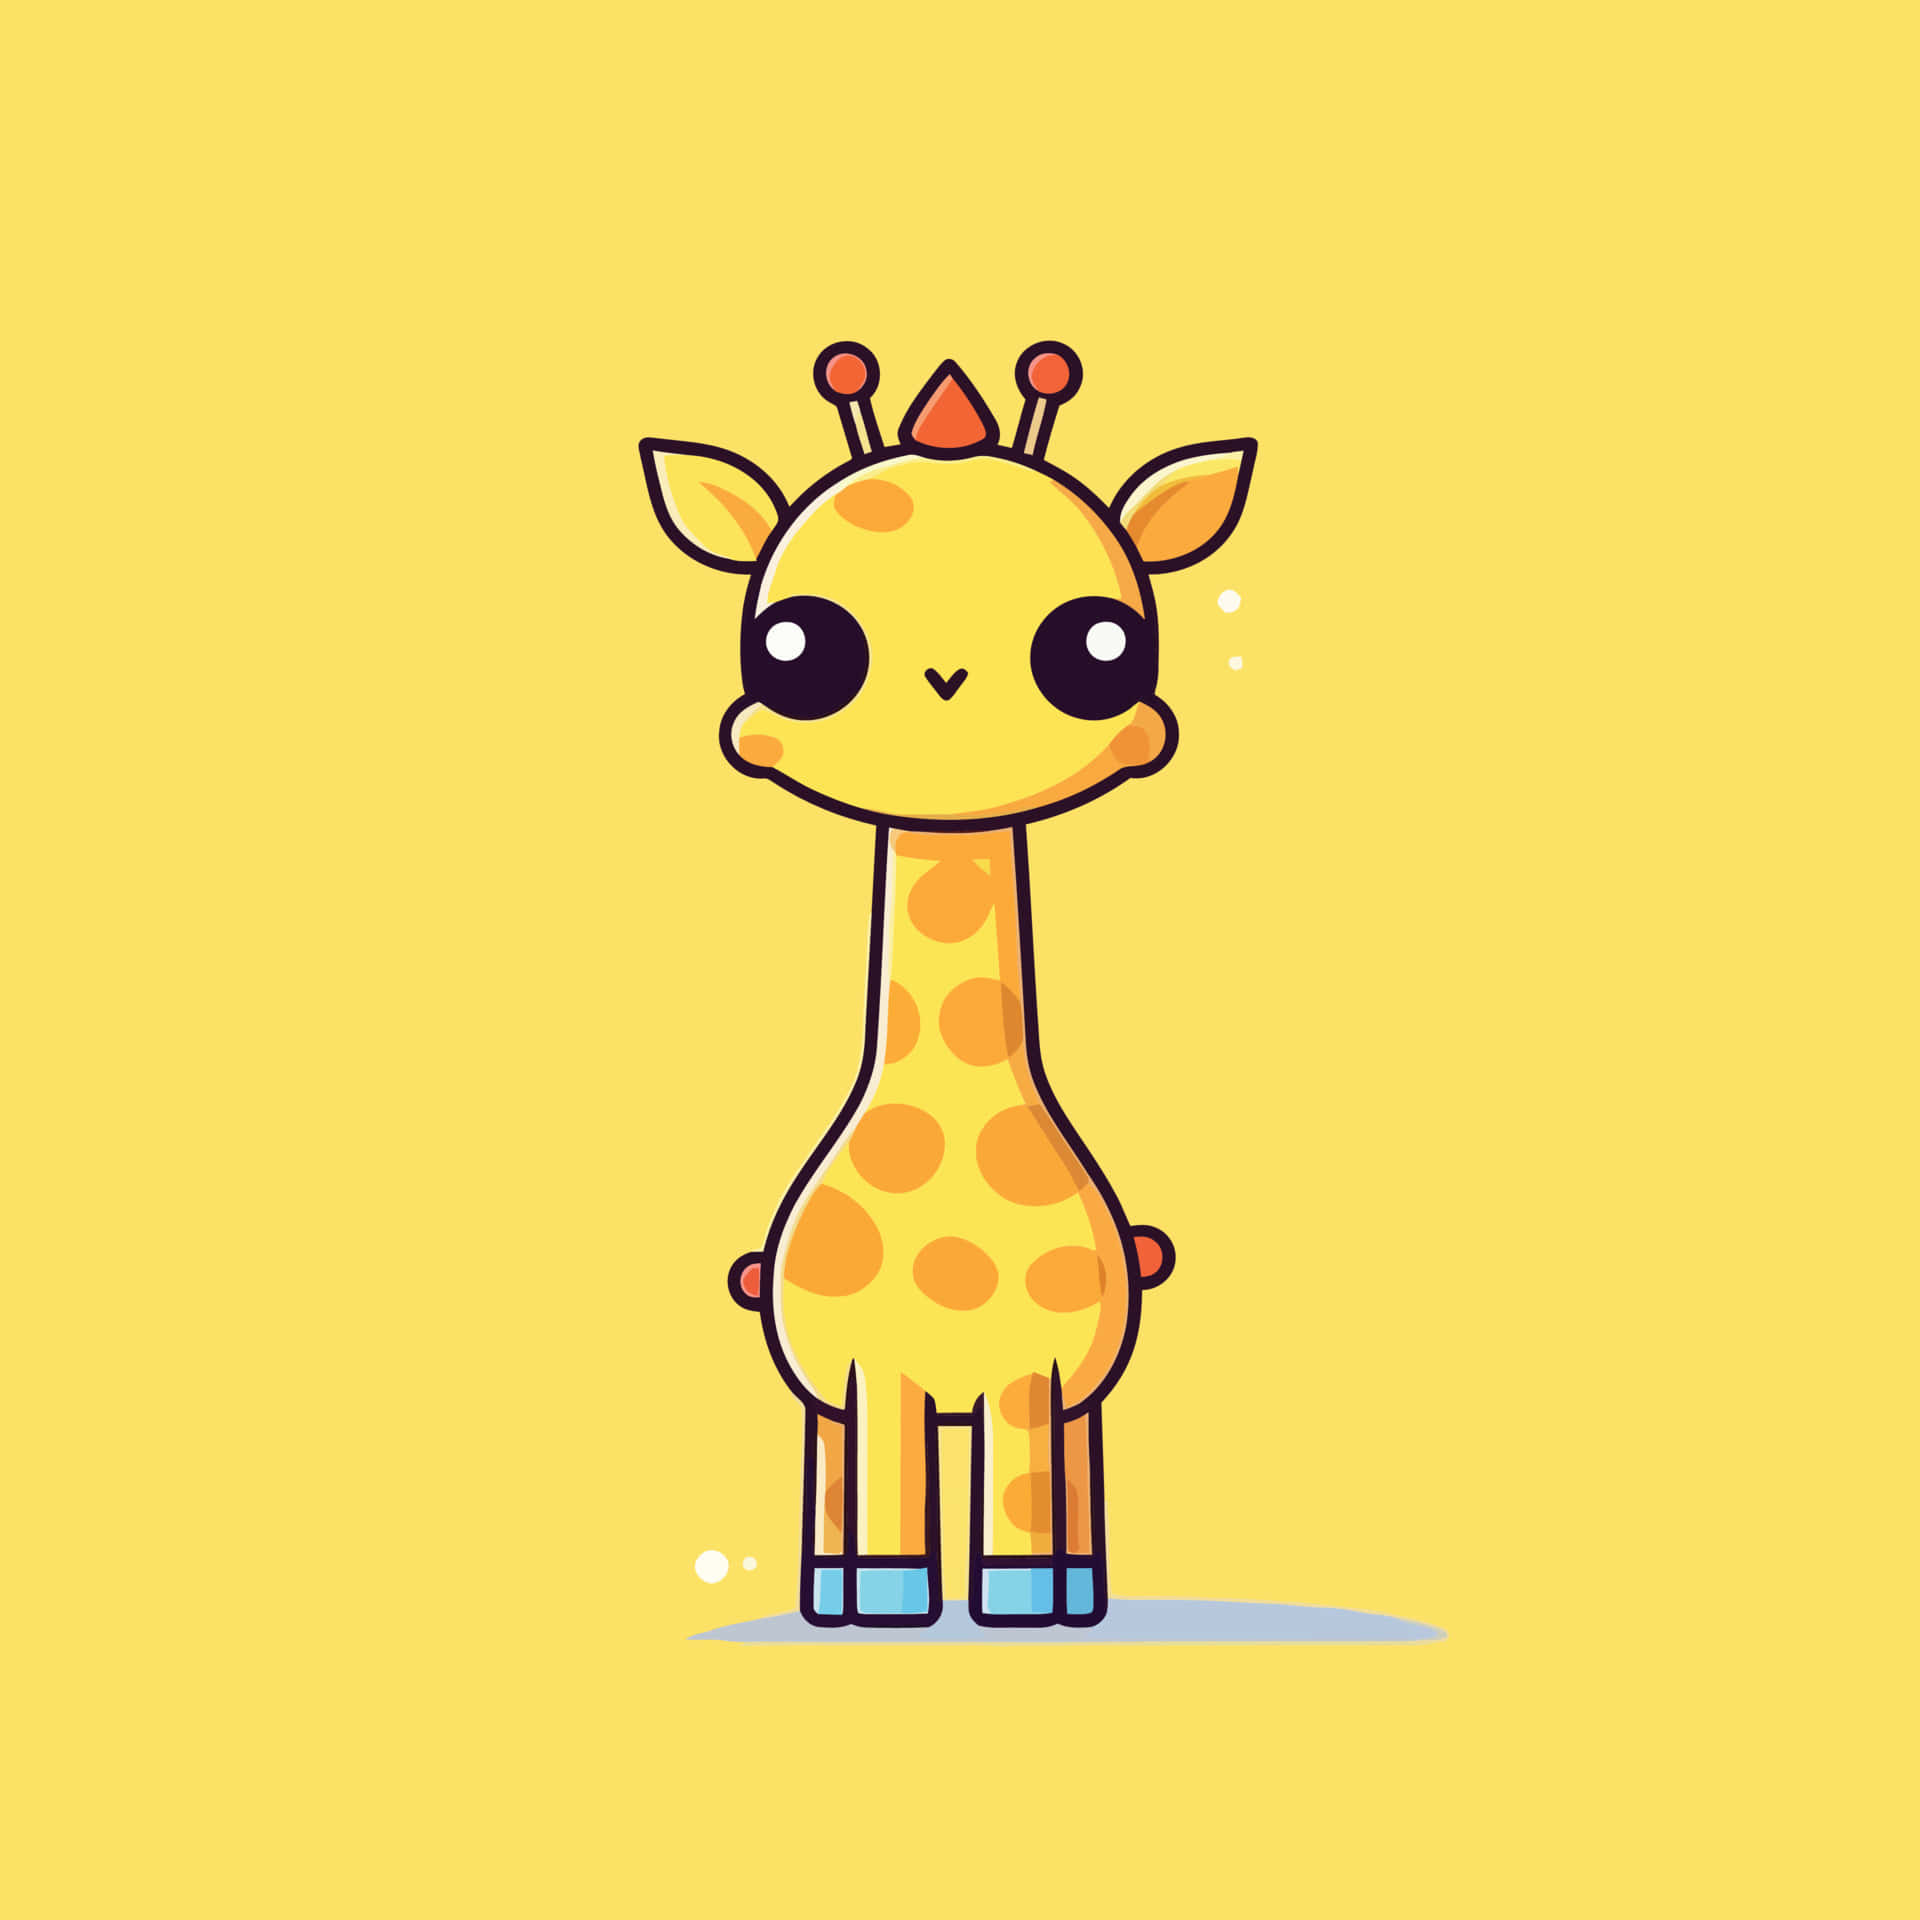 Adorable Kawaii Giraffe with Colorful Hearts and Stars Wallpaper